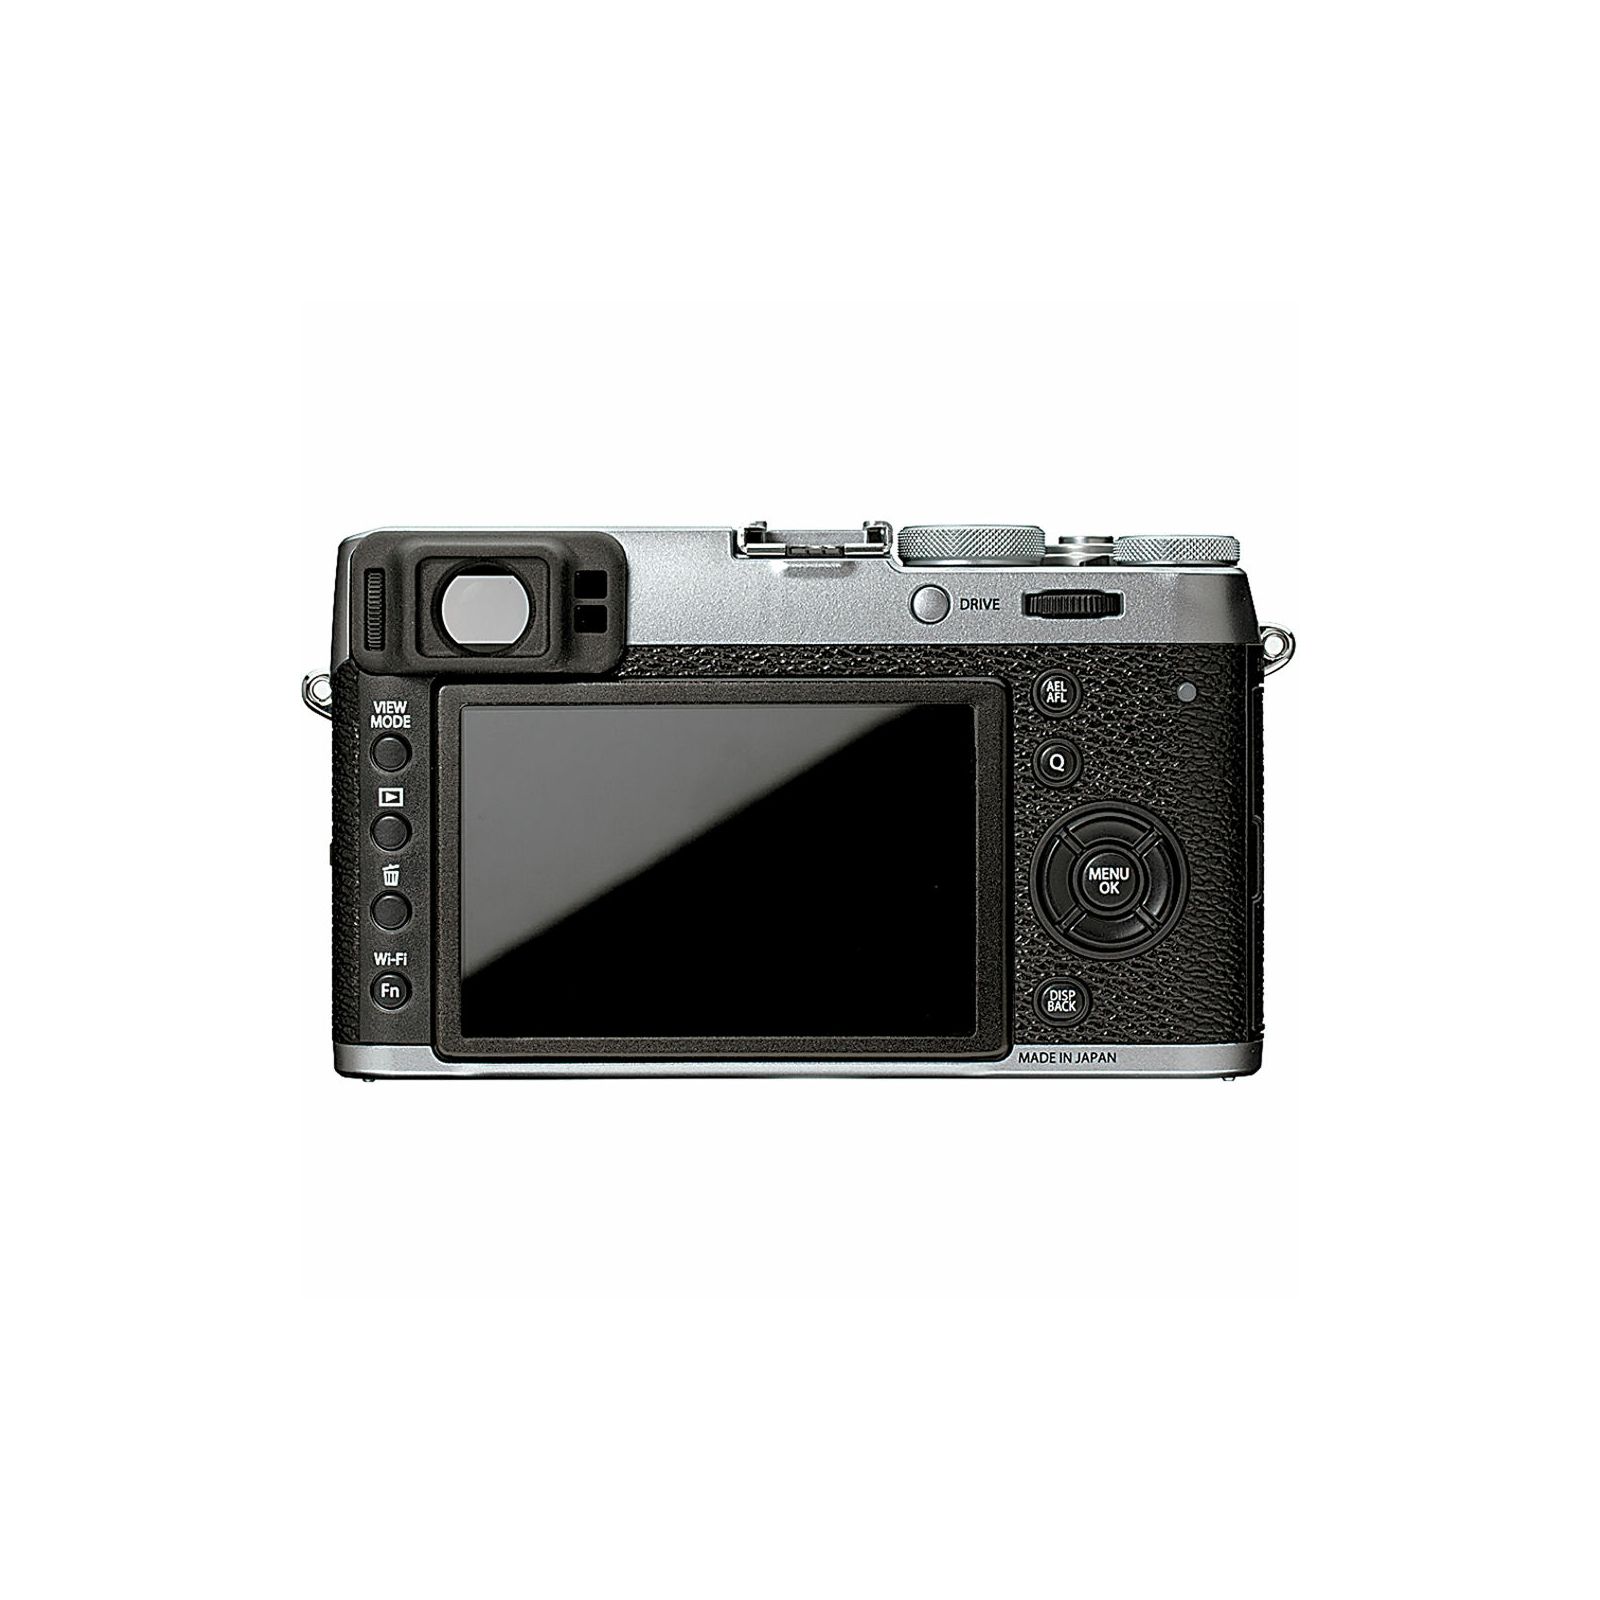 Fuji X-100T Fujifilm digitalni fotoaparat srebreni X100T Fuji X-100T 23mm F2.0, X-Trans2 PD (16m, APS), 3.0" LCD, 1040k + OVF